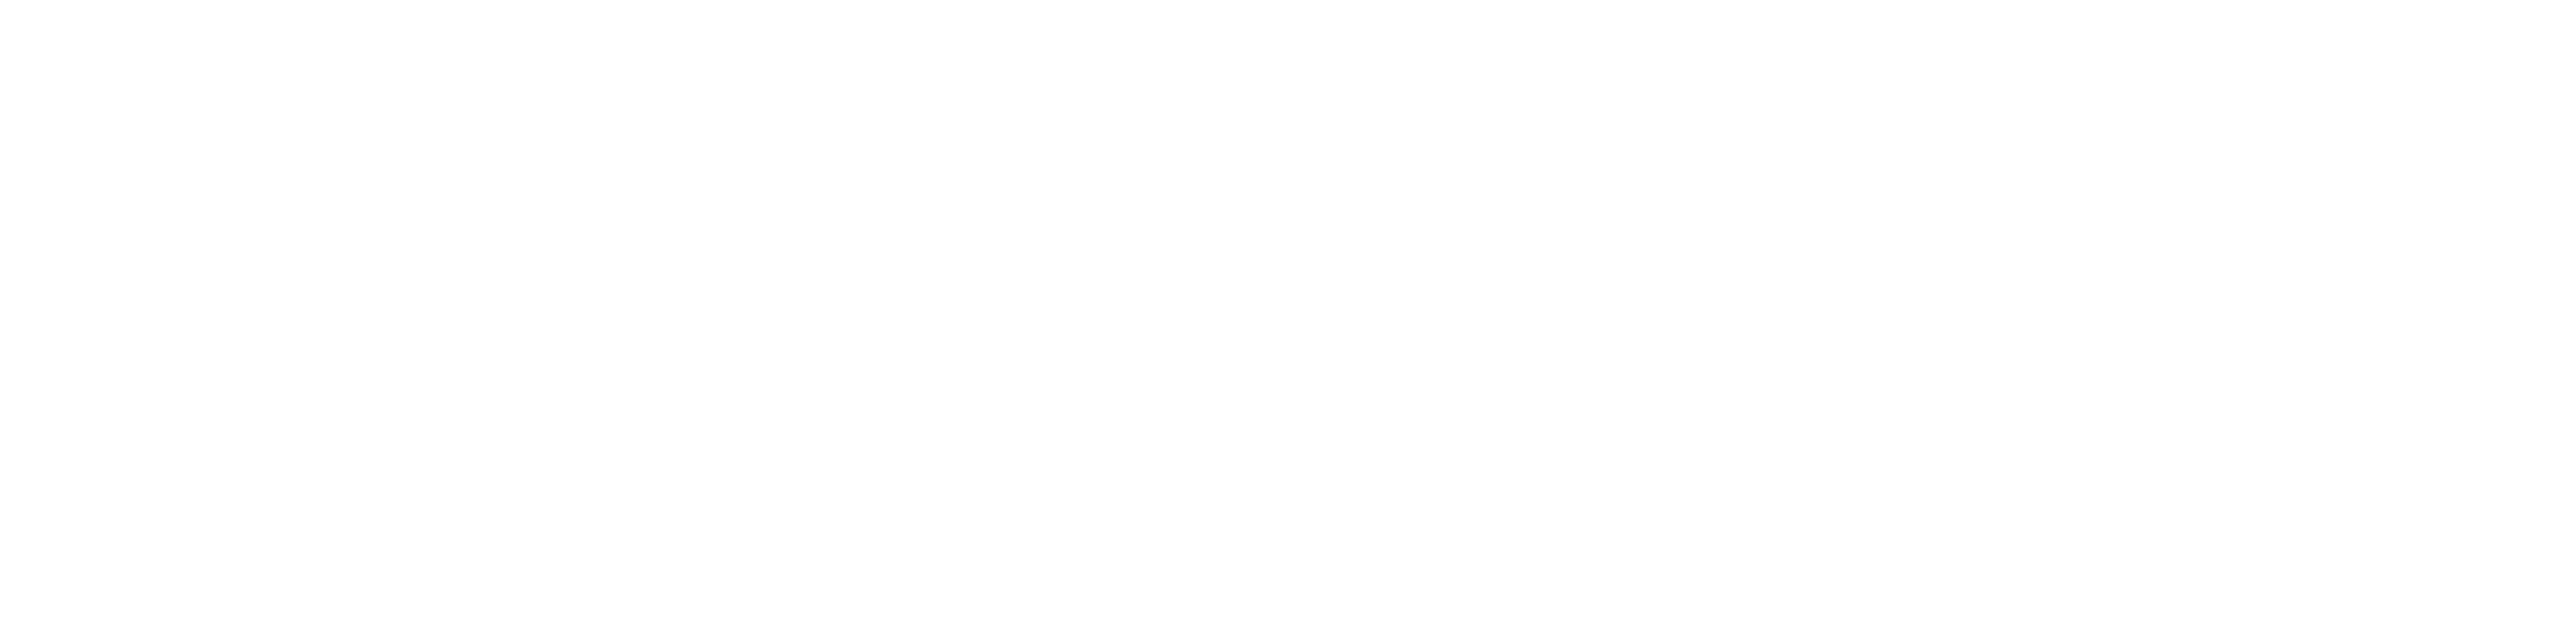 Fabuwood Logo - Ready To Go Cabinets - Kitchen & Bathroom